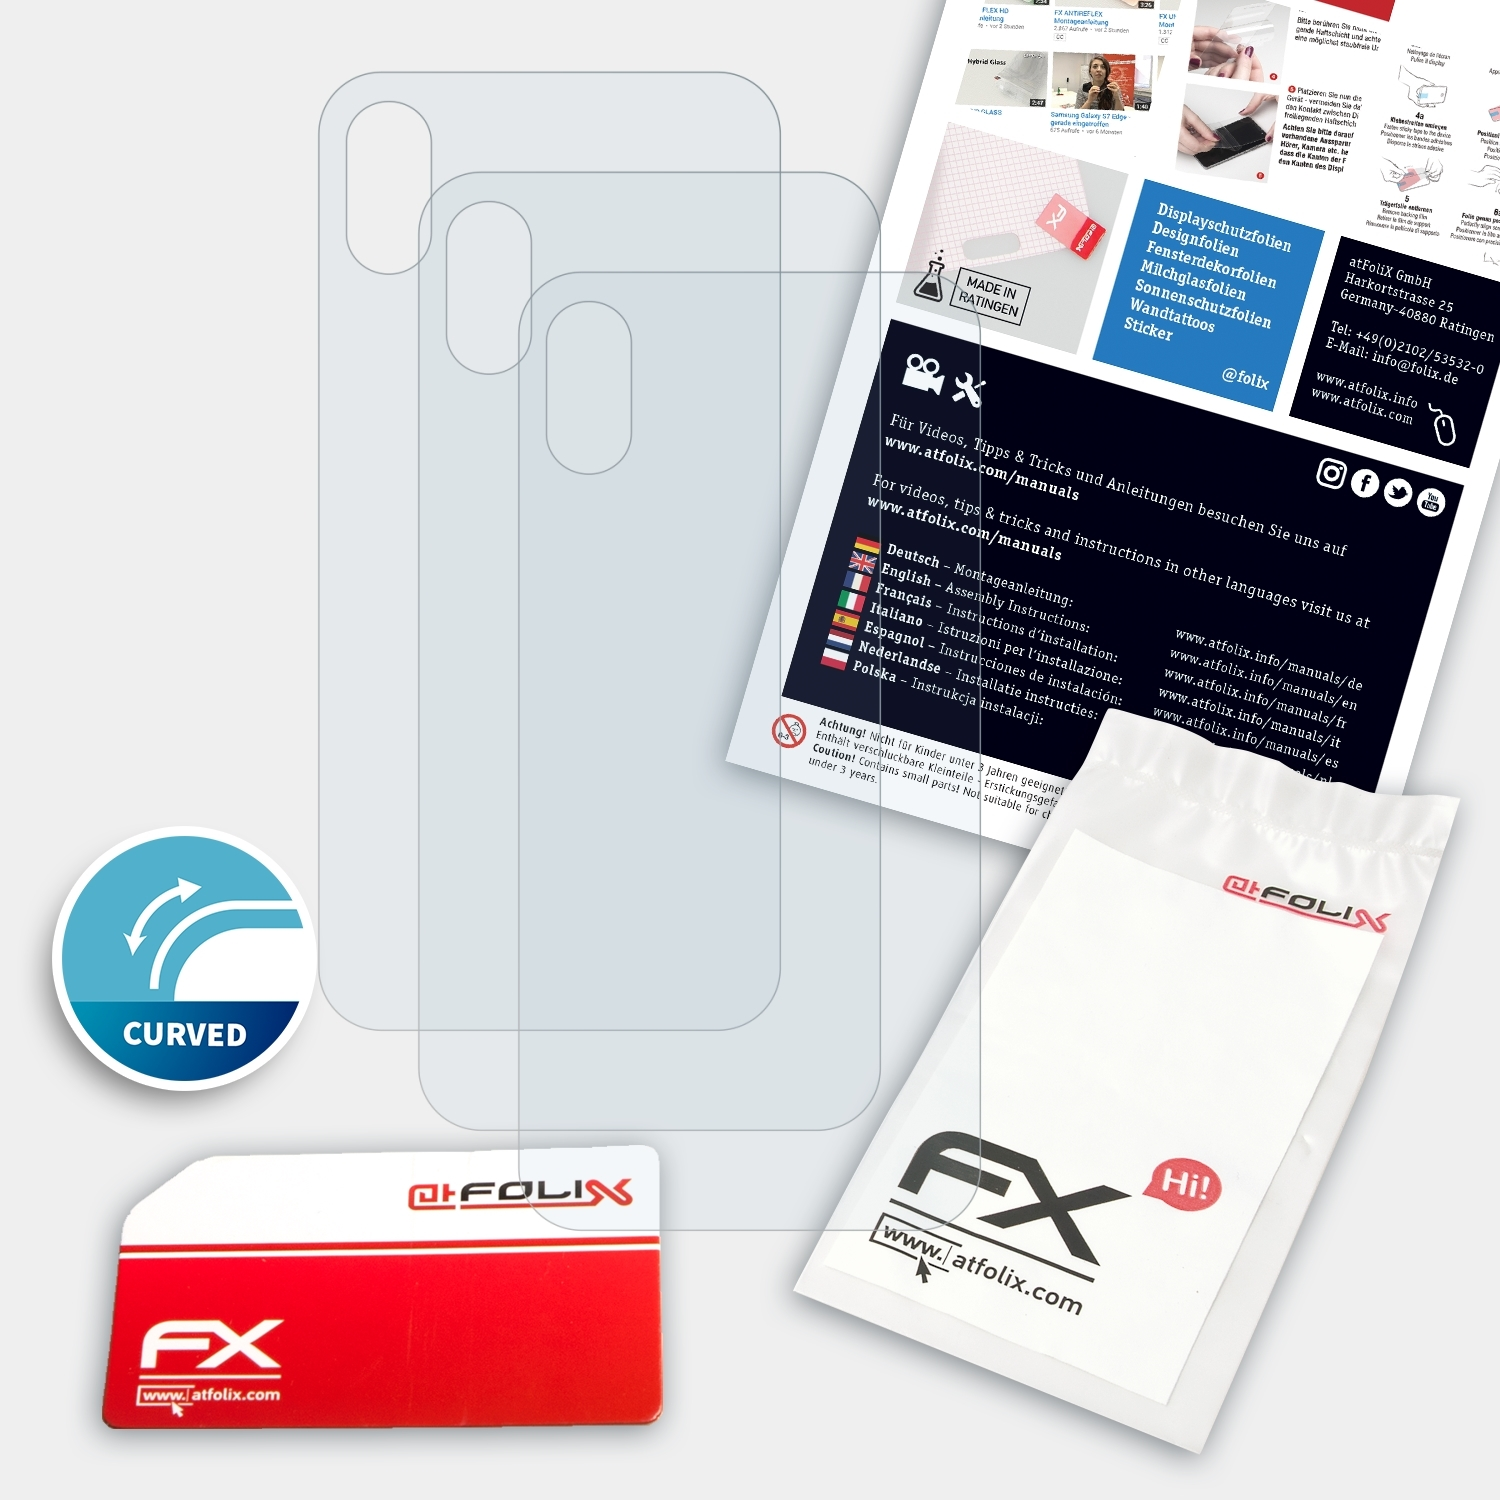 XS FX-ActiFleX (Back ATFOLIX 3x Displayschutz(für iPhone Apple cover))